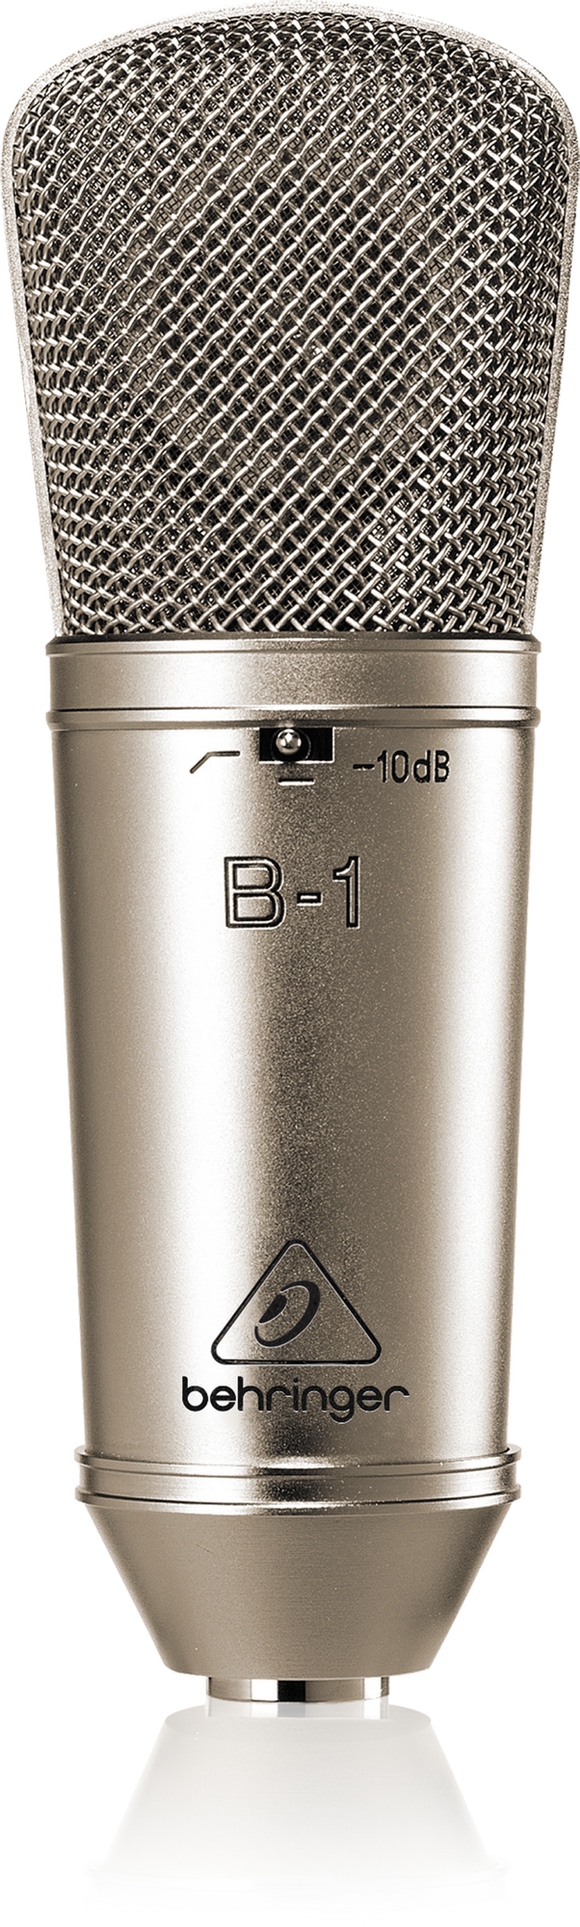 Behringer CONDENSER MICROPHONE B-1 Gold-Sputtered Large-Diaphragm Studio Condenser Microphone